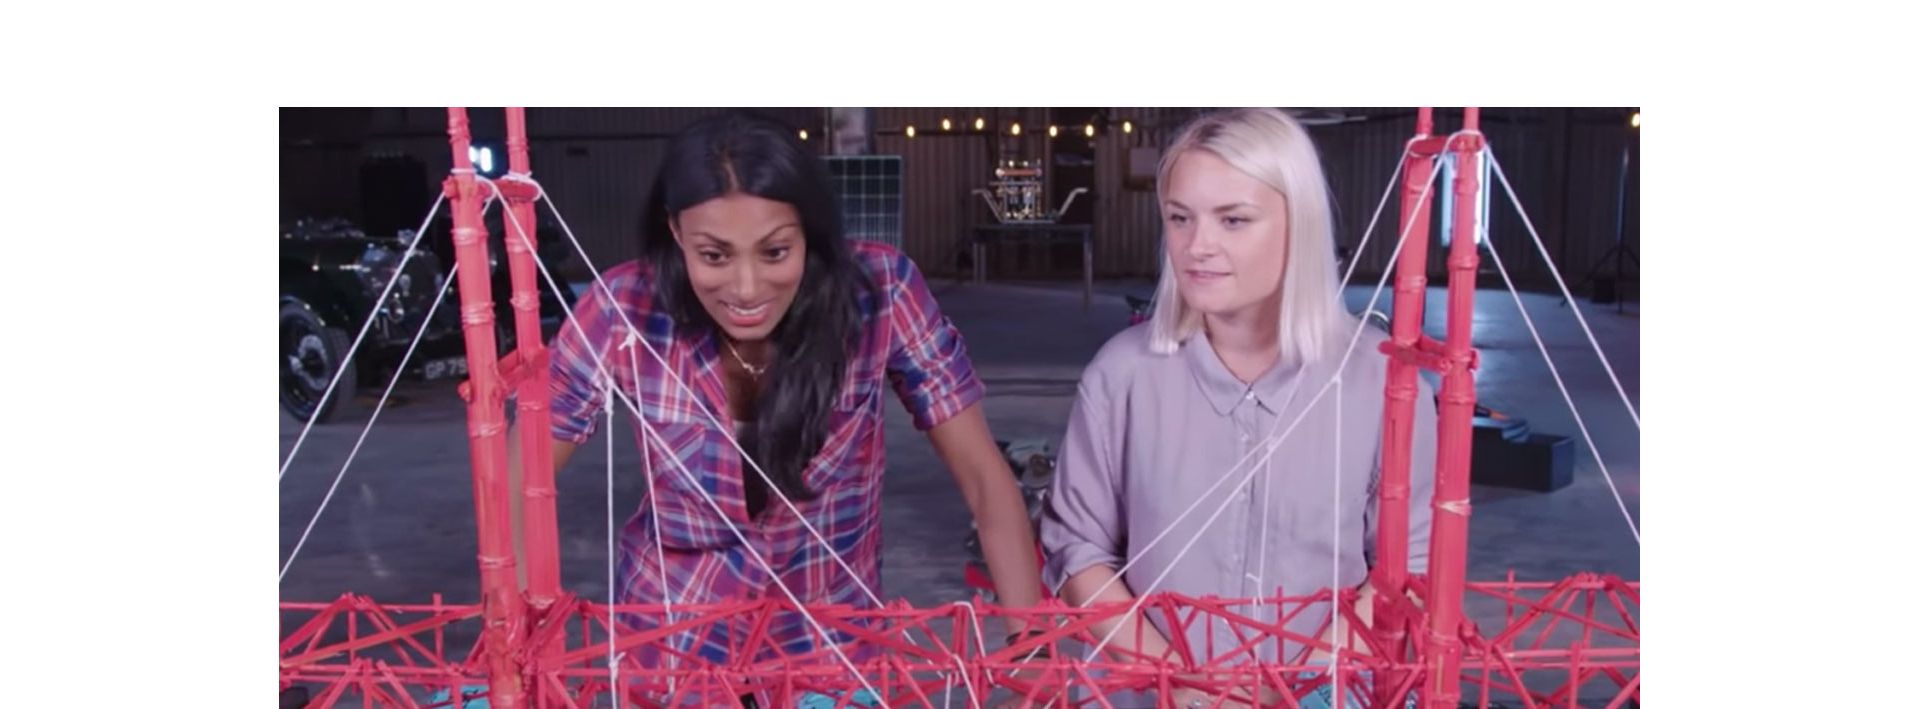 A Dyson engineer shows the spaghetti bridge challenge.